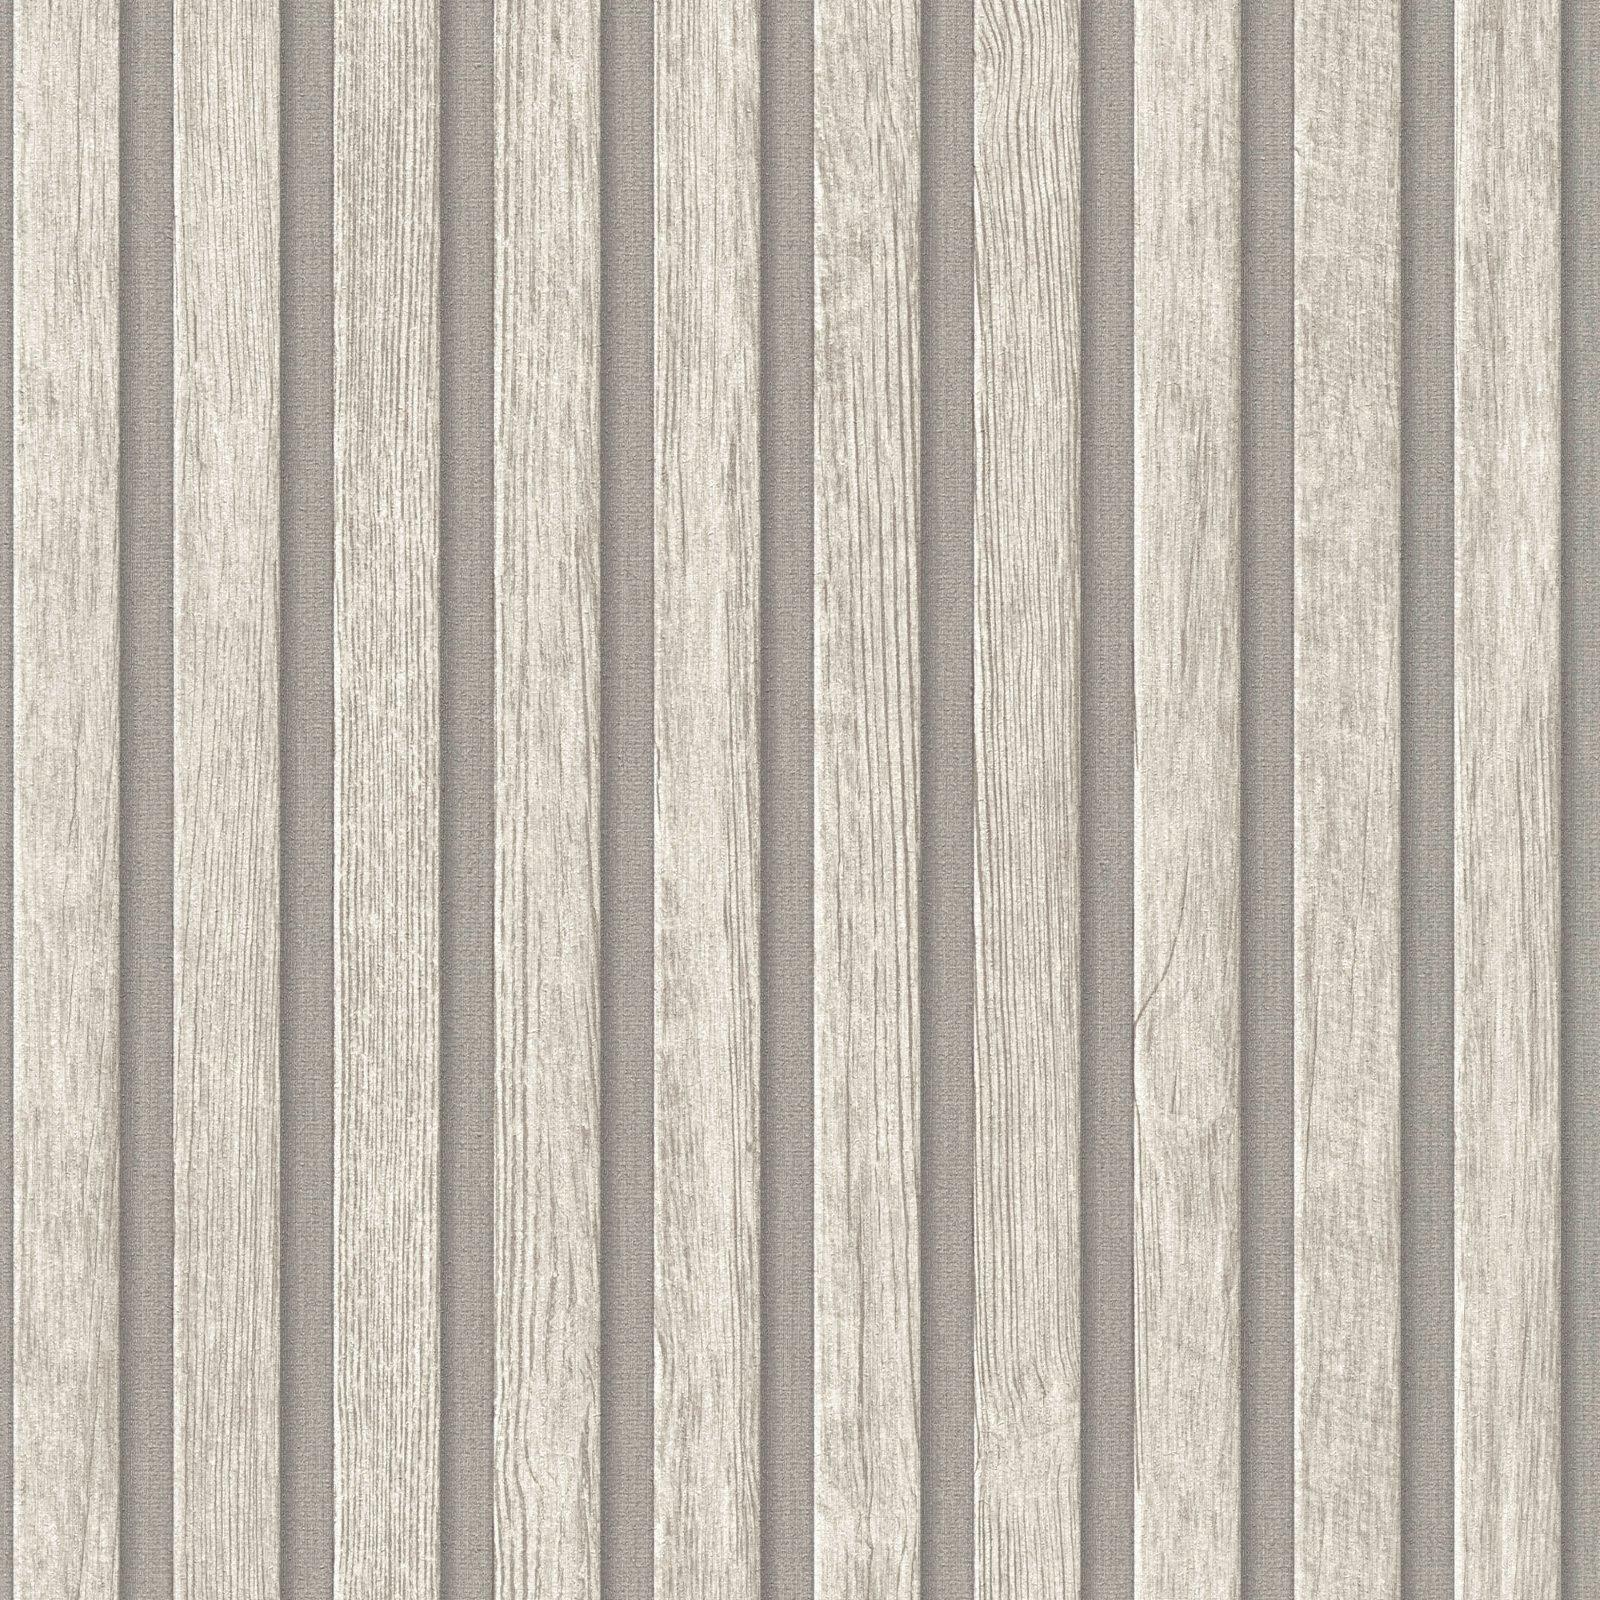 Photos - Wallpaper Wooden Slats Panelling 3D Wood Panel Stripe Off White Silver Grey Wallpape